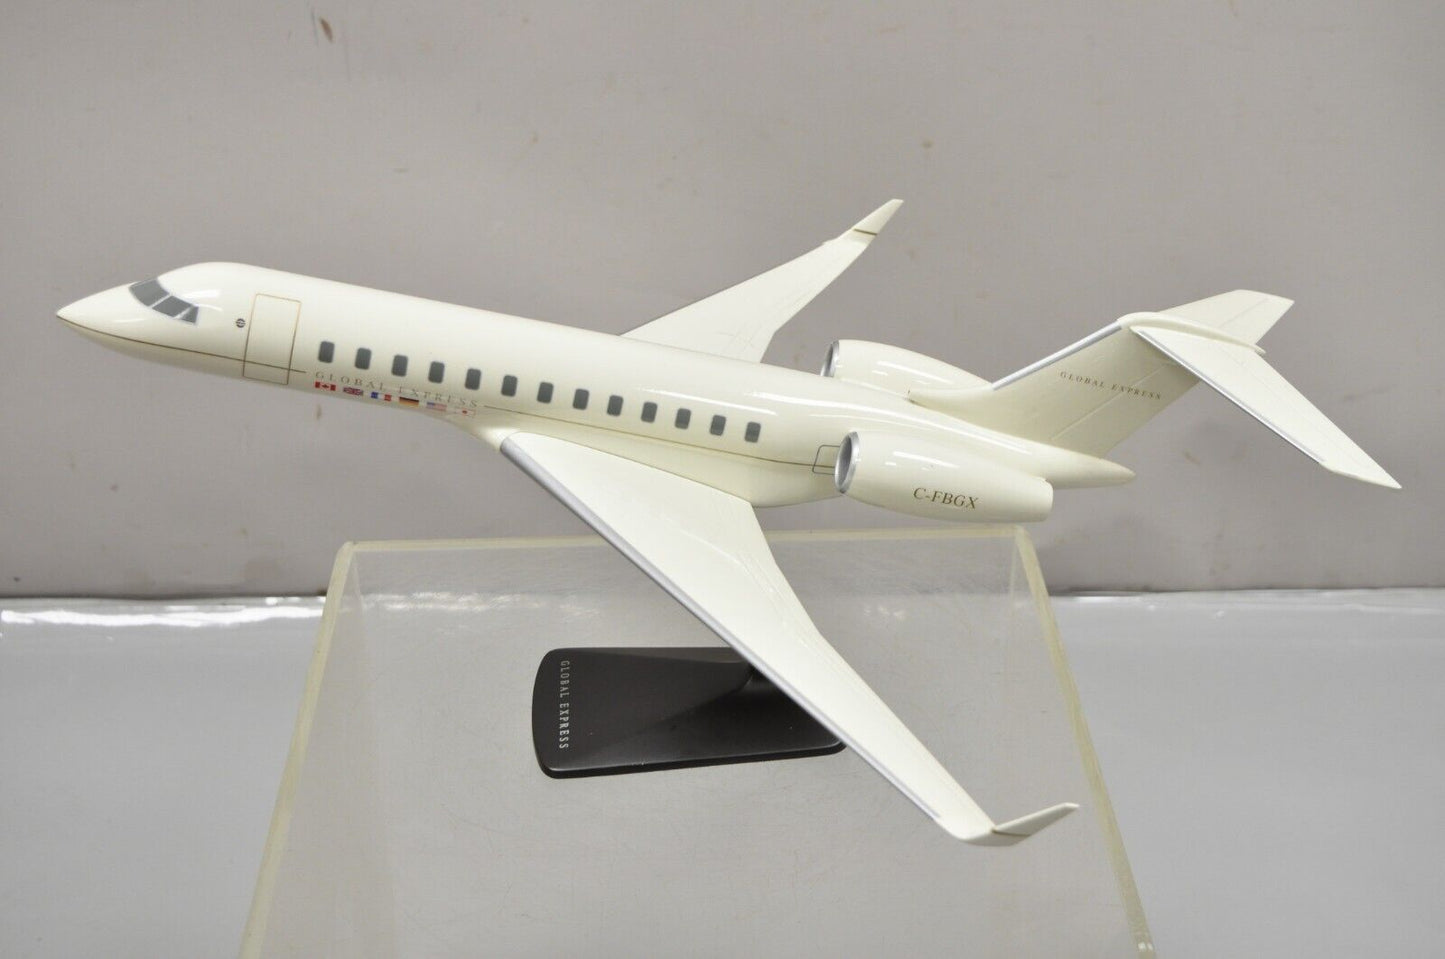 Space Model London England Global Express C-FBGX Bombardier Airplane Model Plane